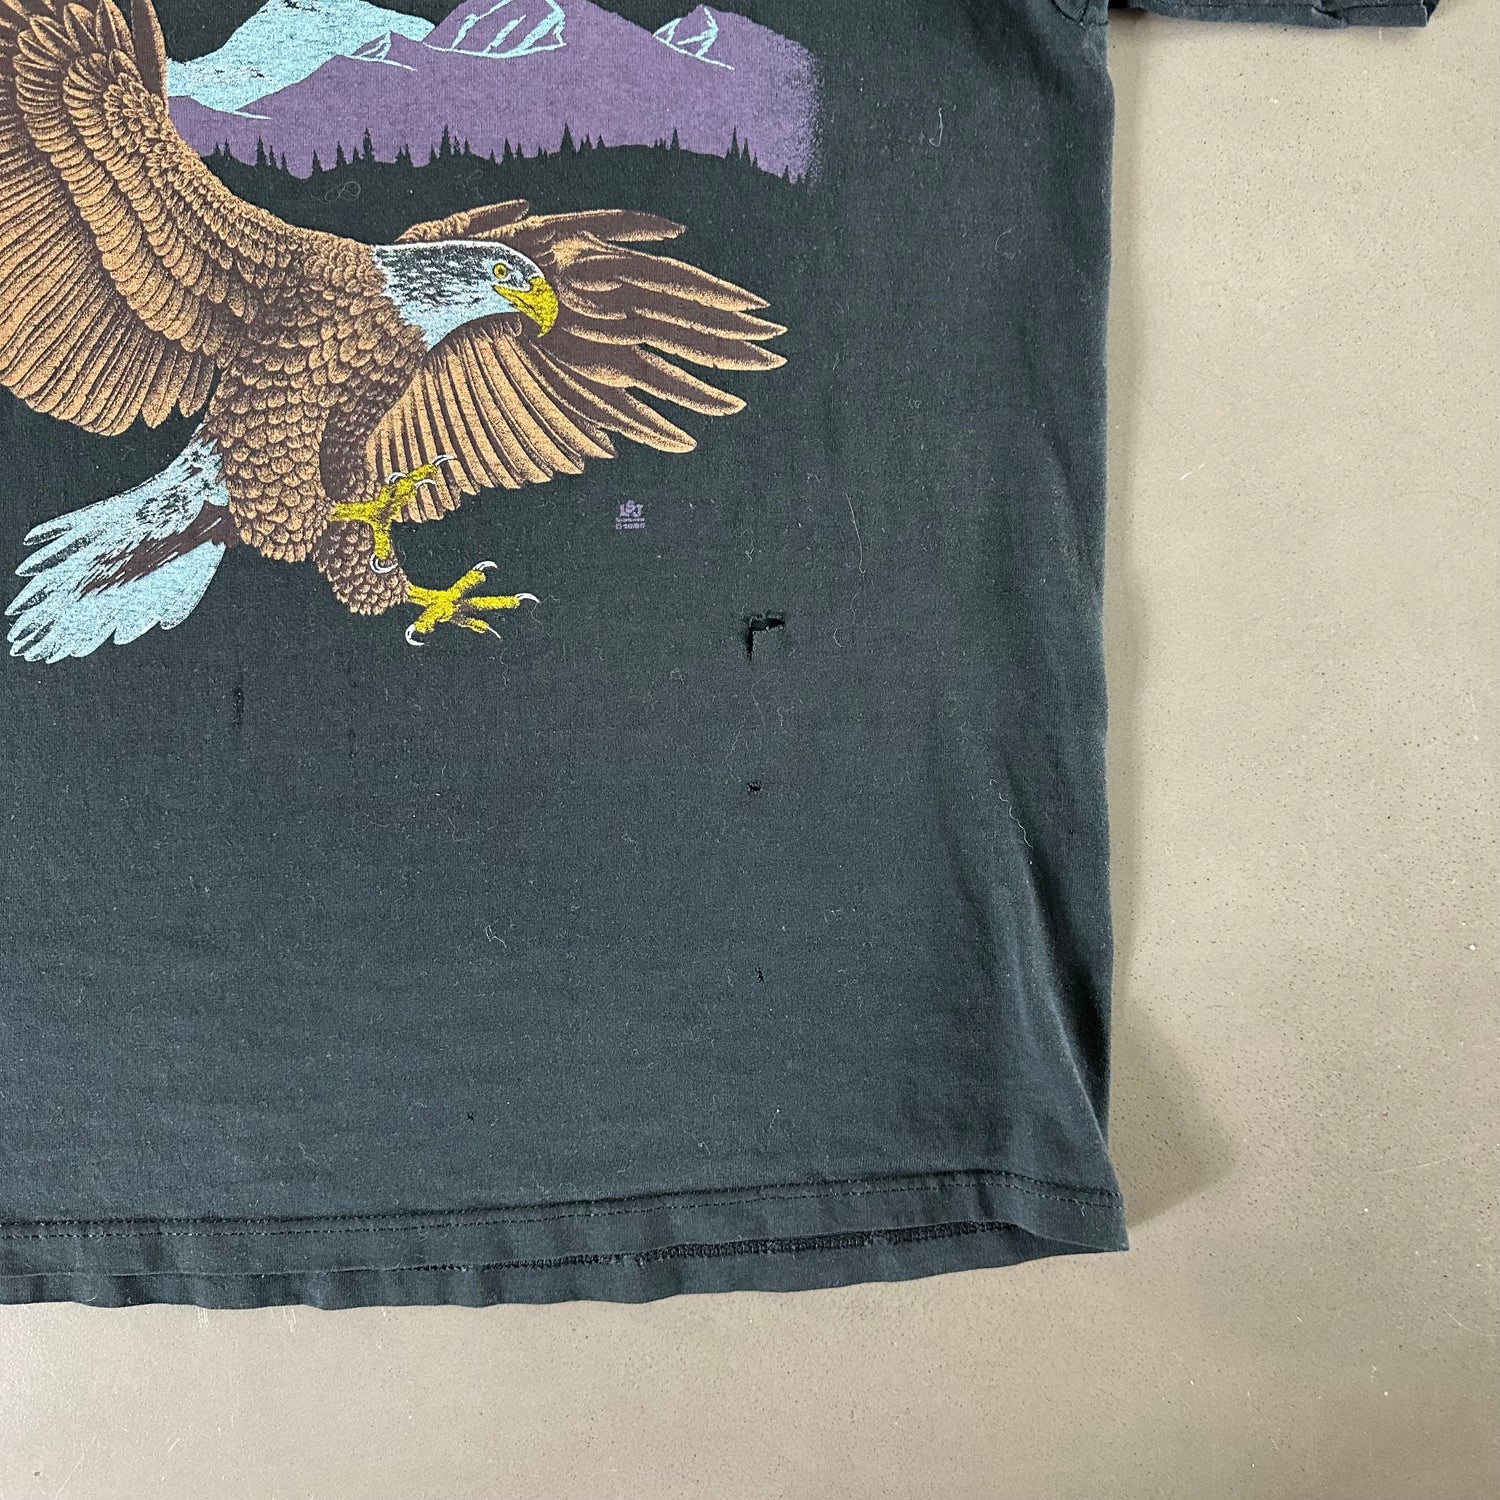 Vintage 1990s Eagle T-shirt size Large